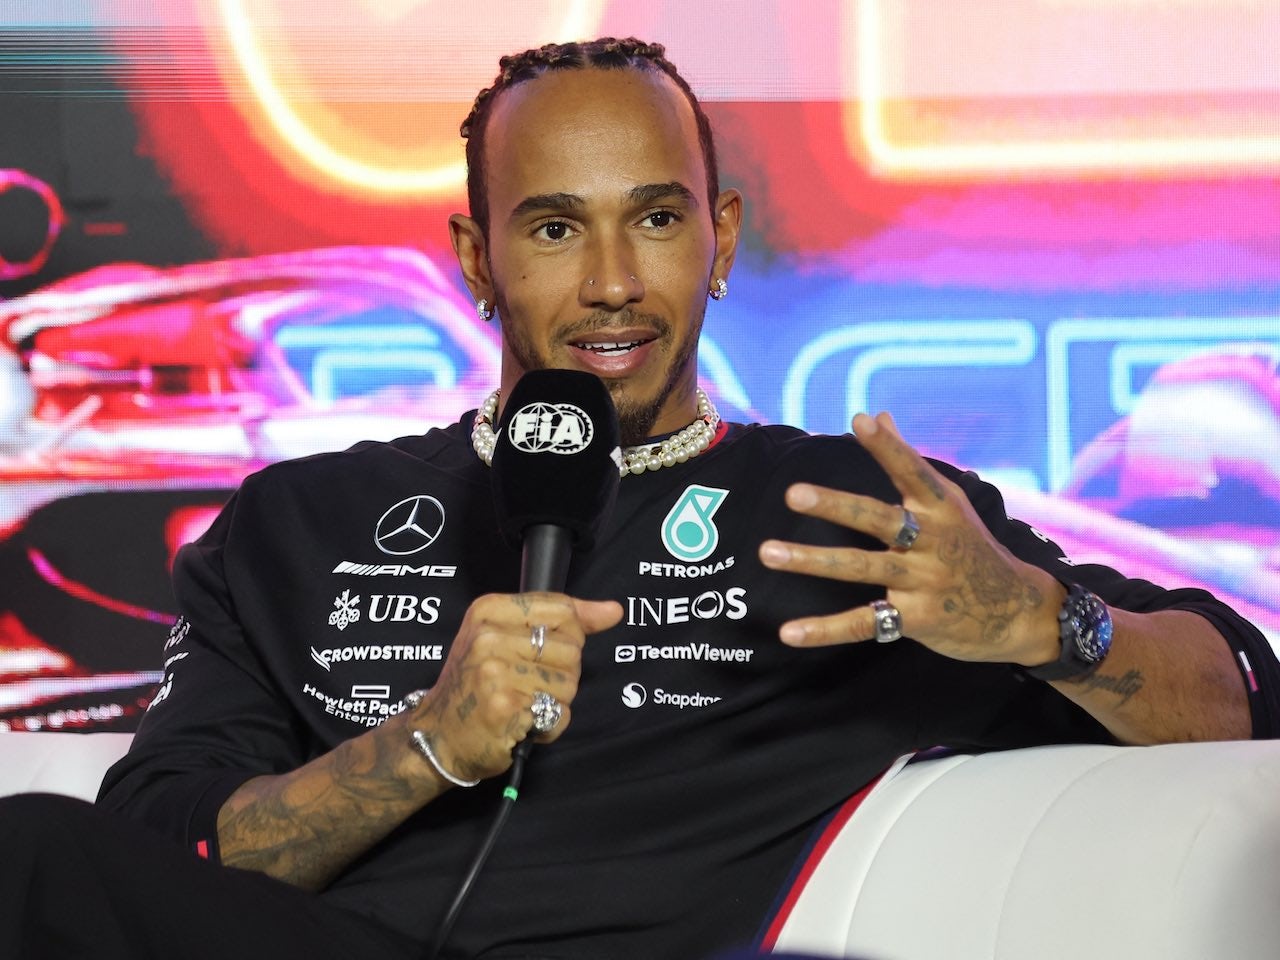 Hamilton won't take big secrets to Ferrari - Wolff